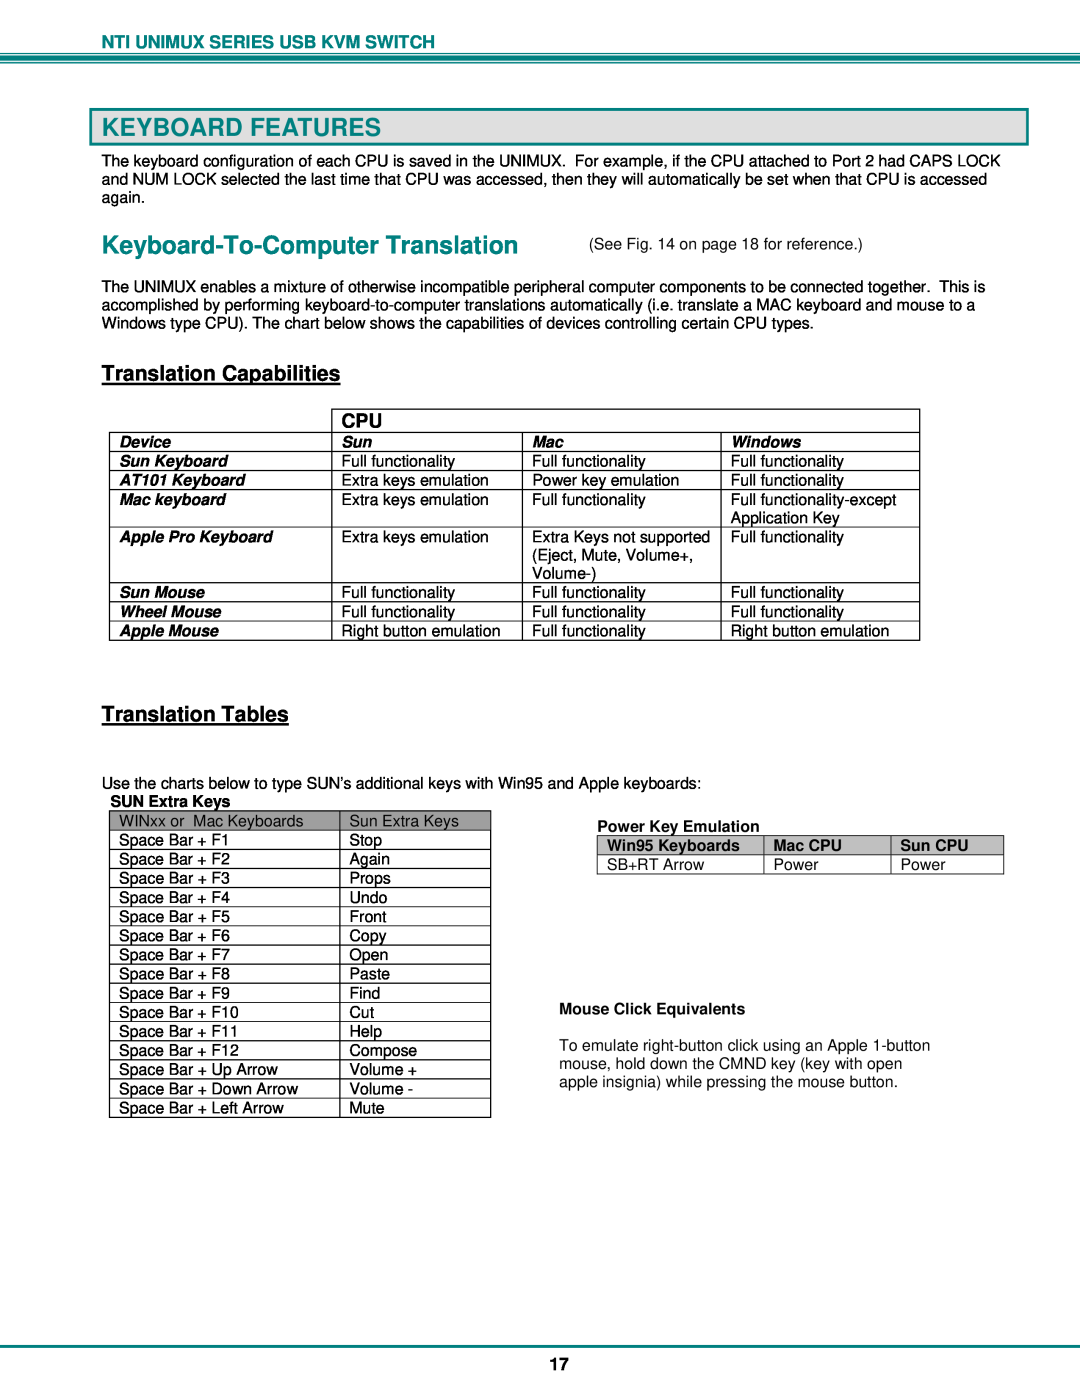 Network Technologies DVI-x operation manual Keyboard Features, Keyboard-To-Computer Translation, Translation Capabilities 